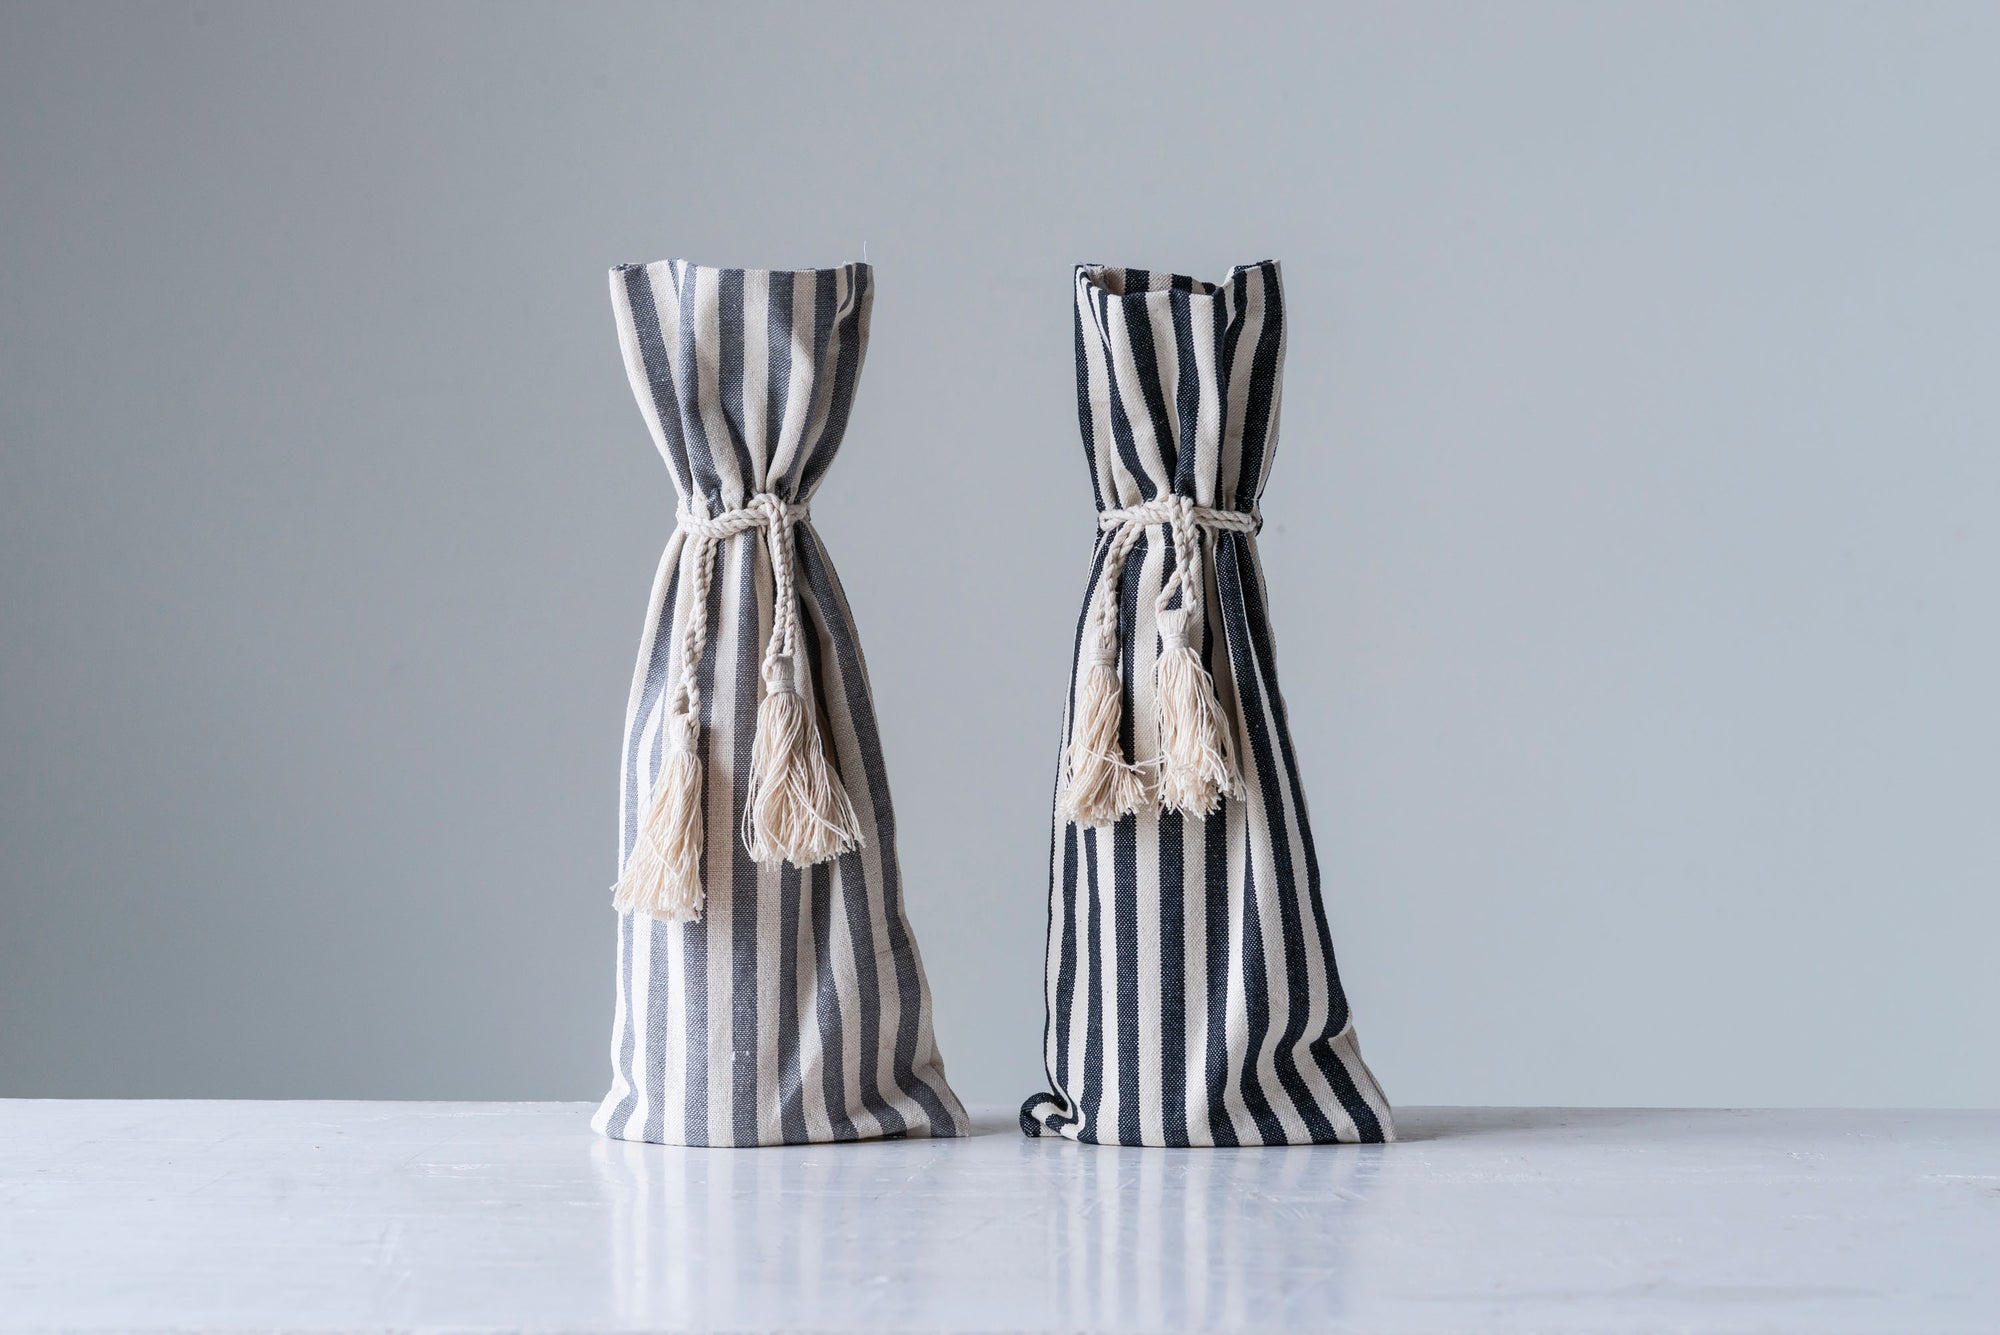 Striped Tasseled Wine Bag